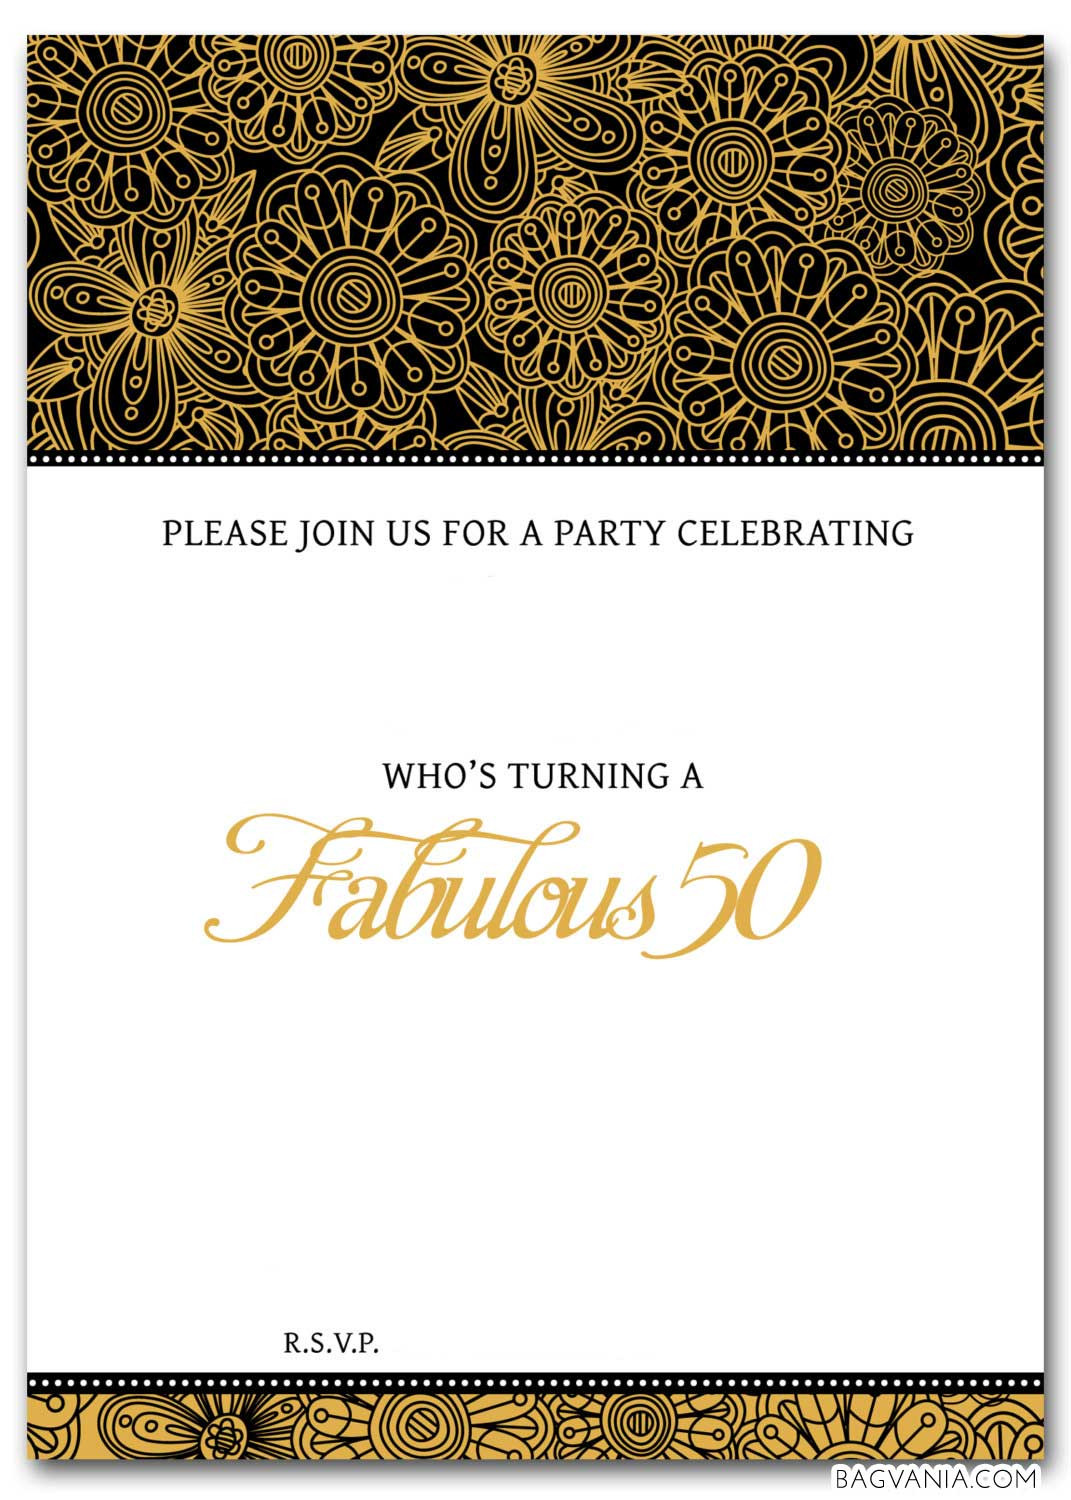 50 Birthday Party Invitations
 FREE 50th Birthday Party Invitations Wording – FREE